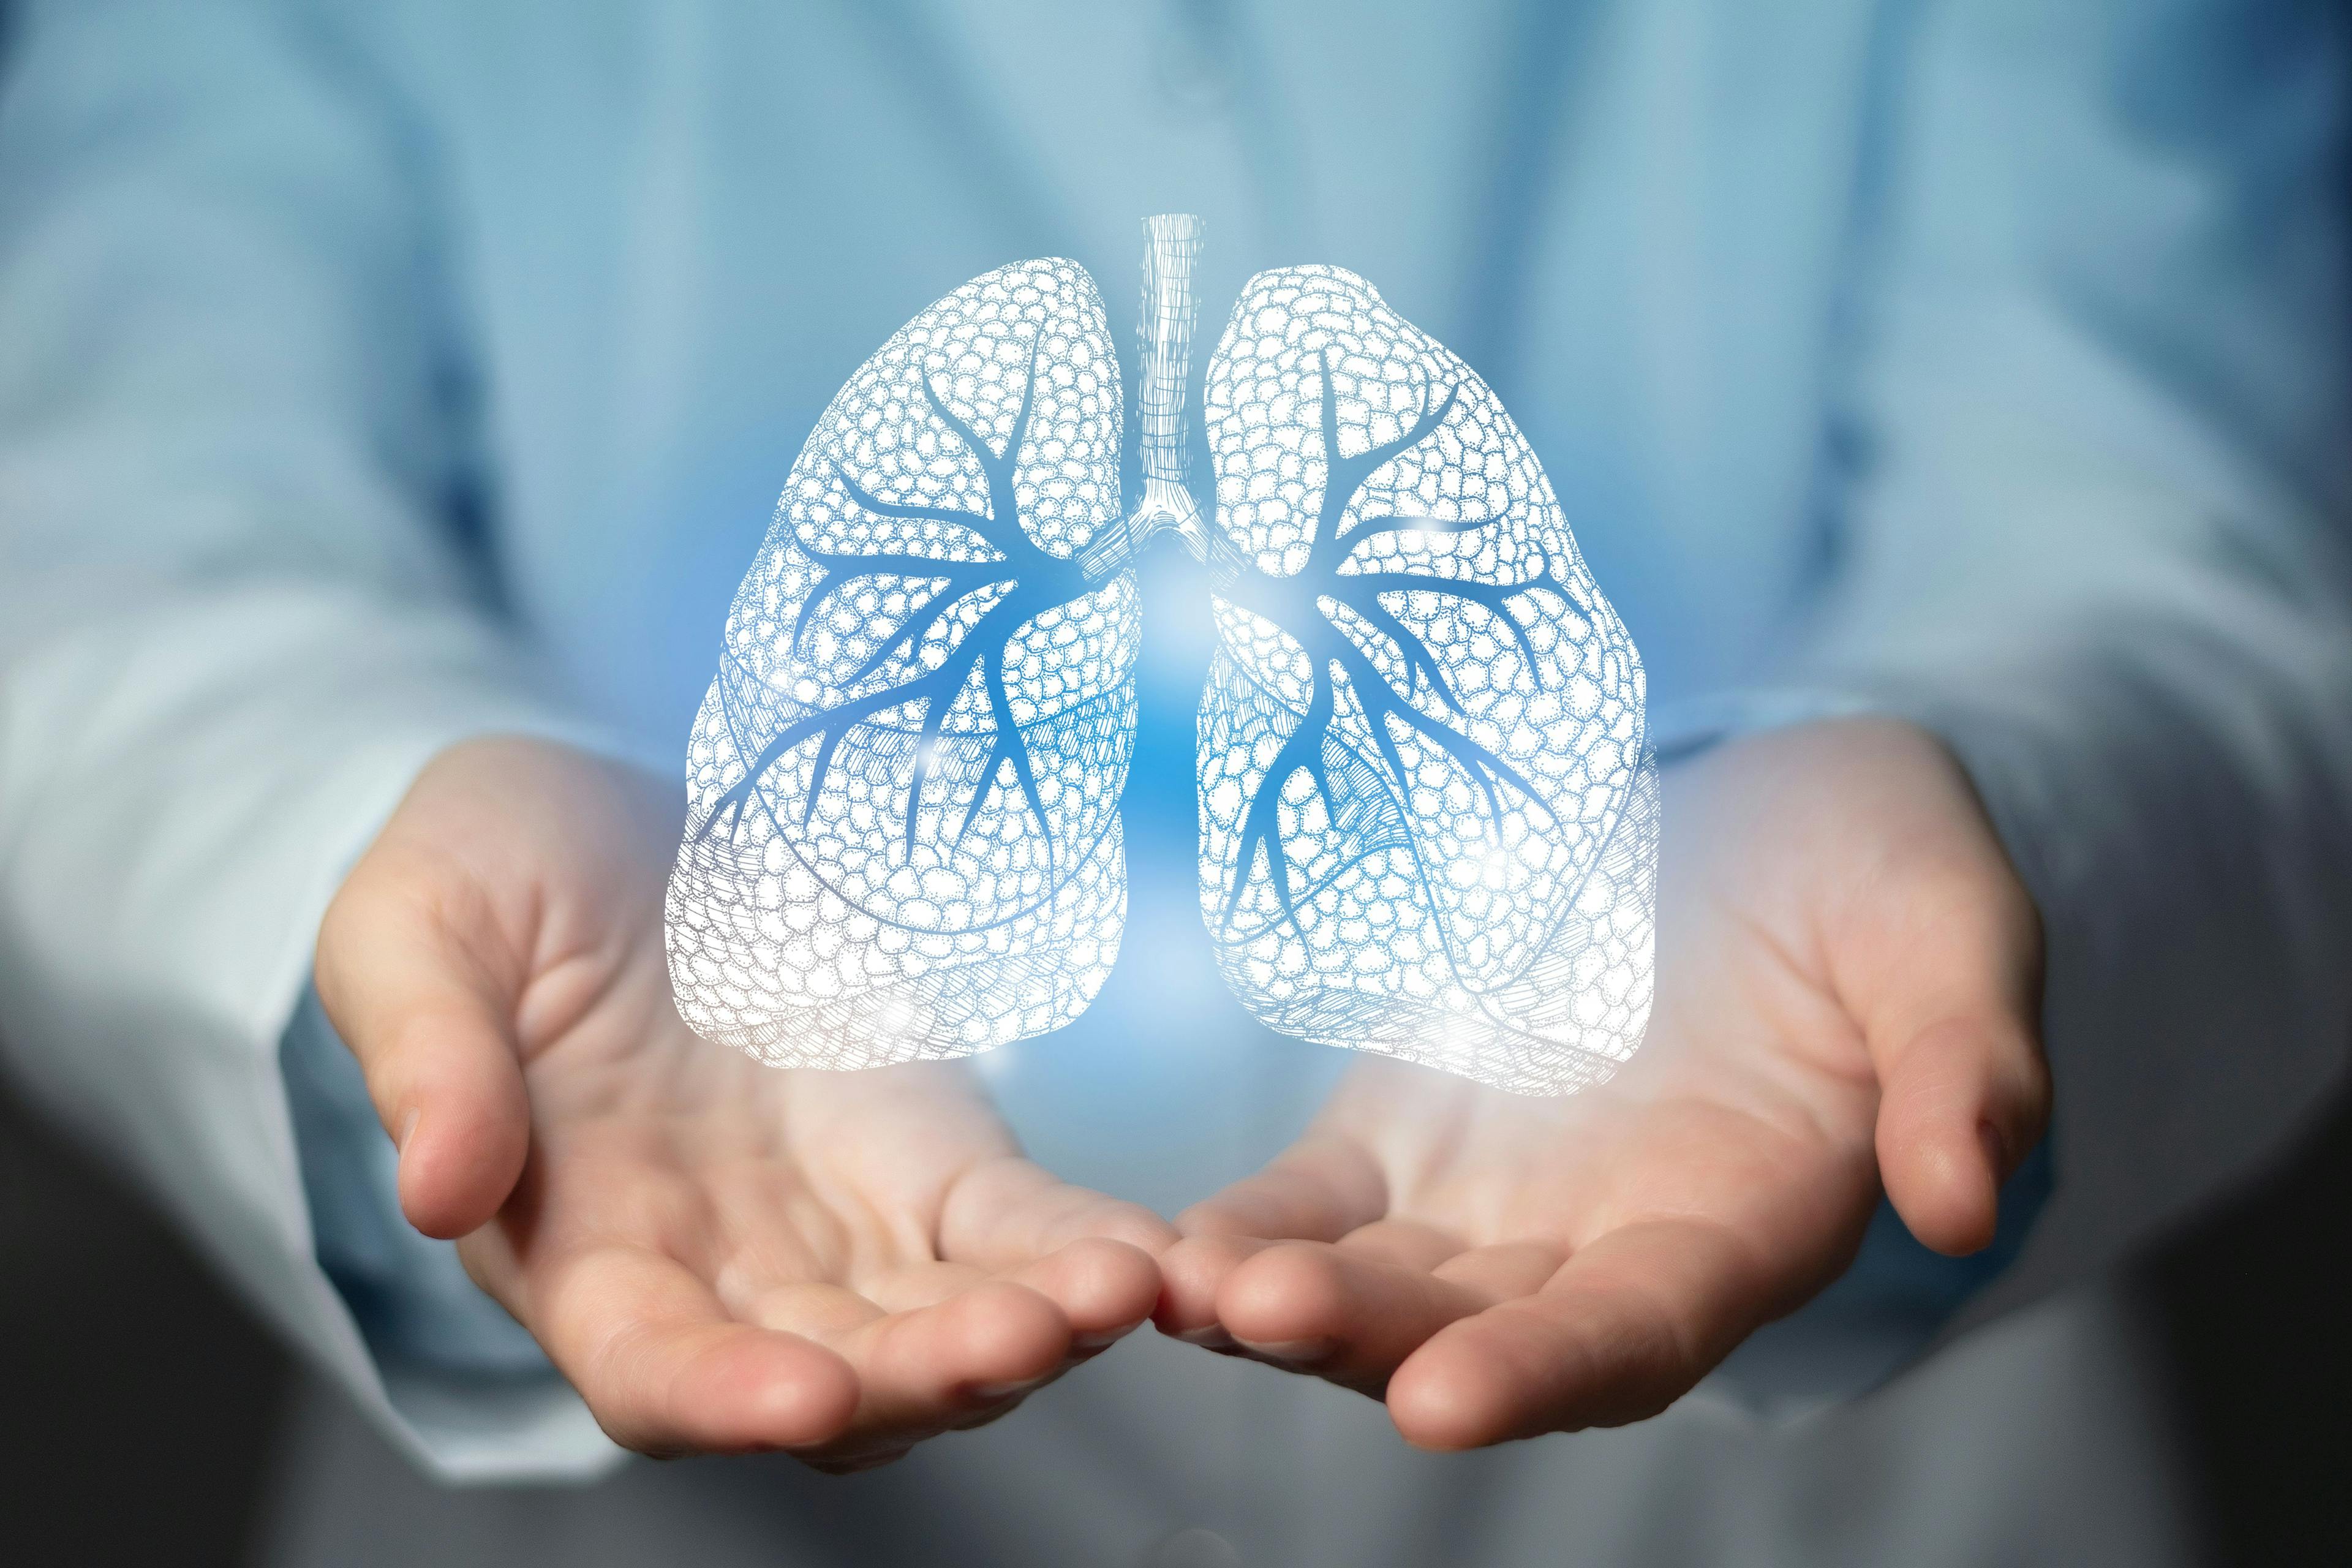 Baseline Respiratory Symptoms May Increase VTE Risk in Women